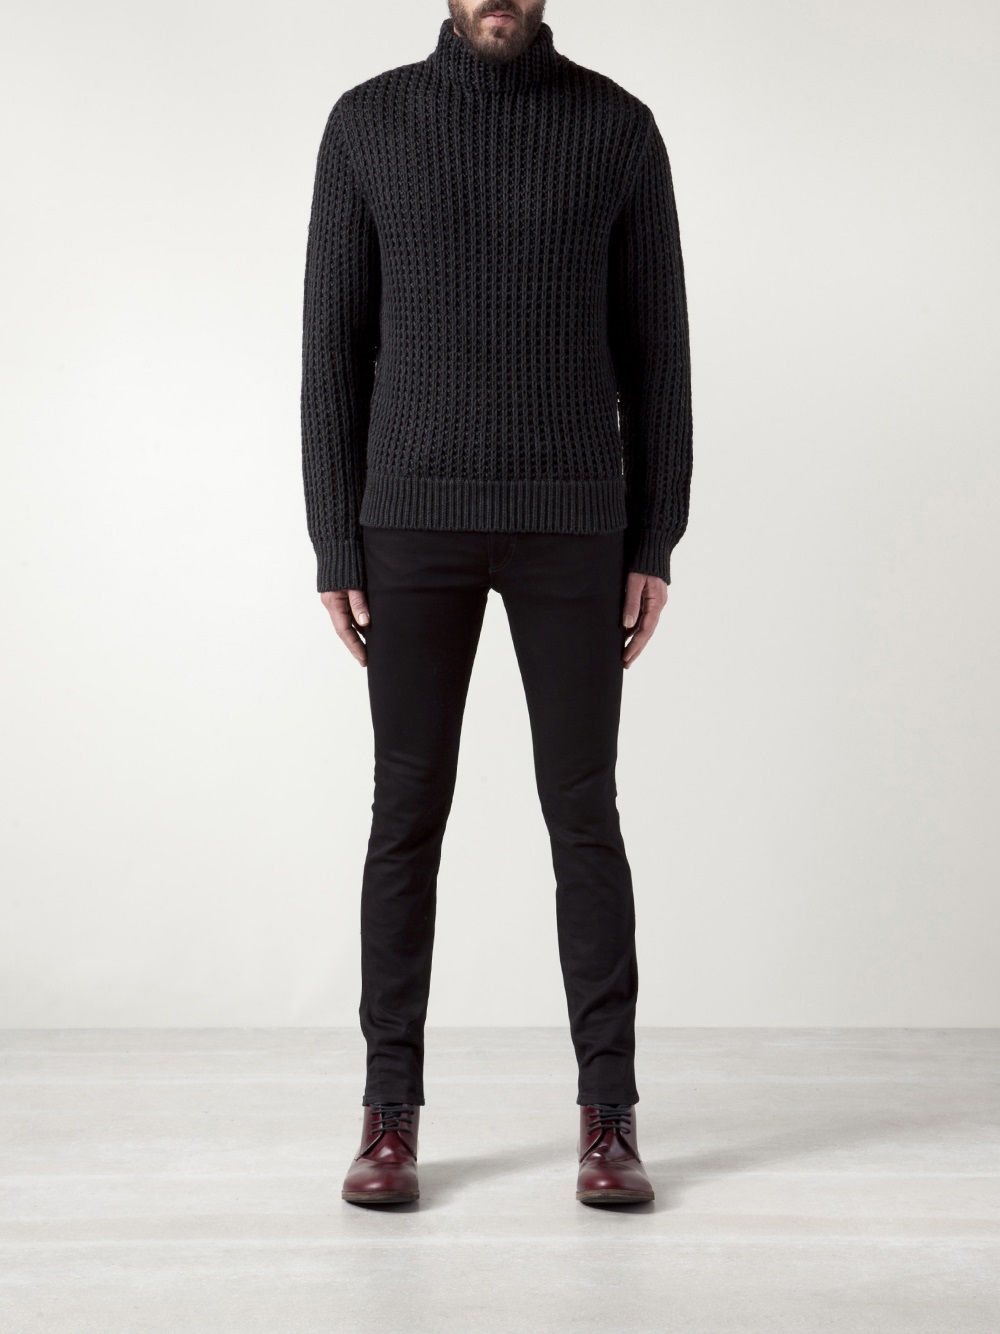 Lyst - Calvin Klein Chunky Turtleneck Sweater in Gray for Men